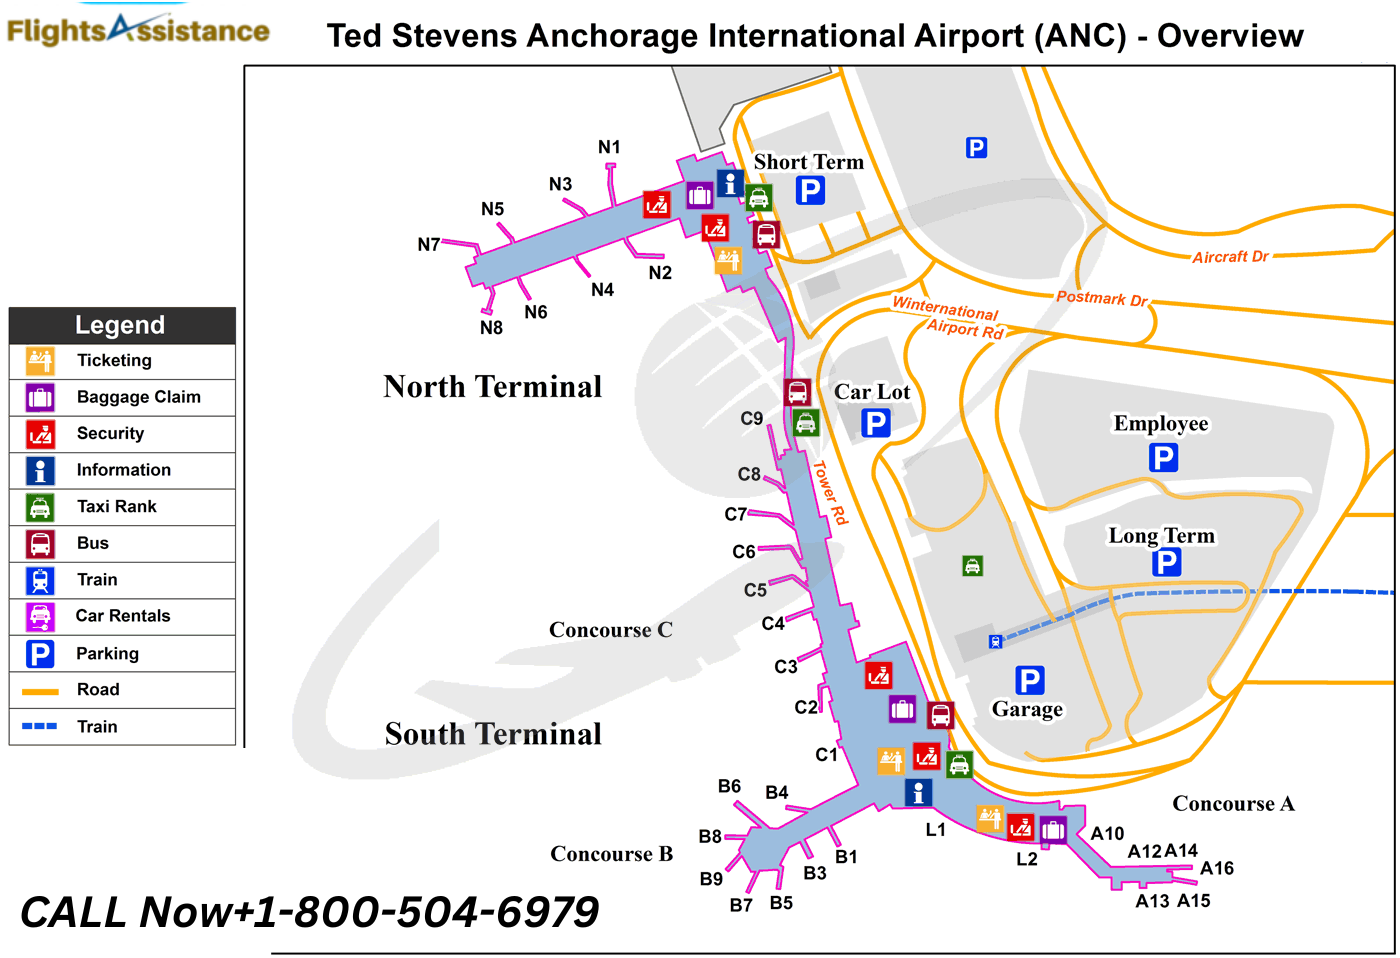 Ted Stevens International Airport Map